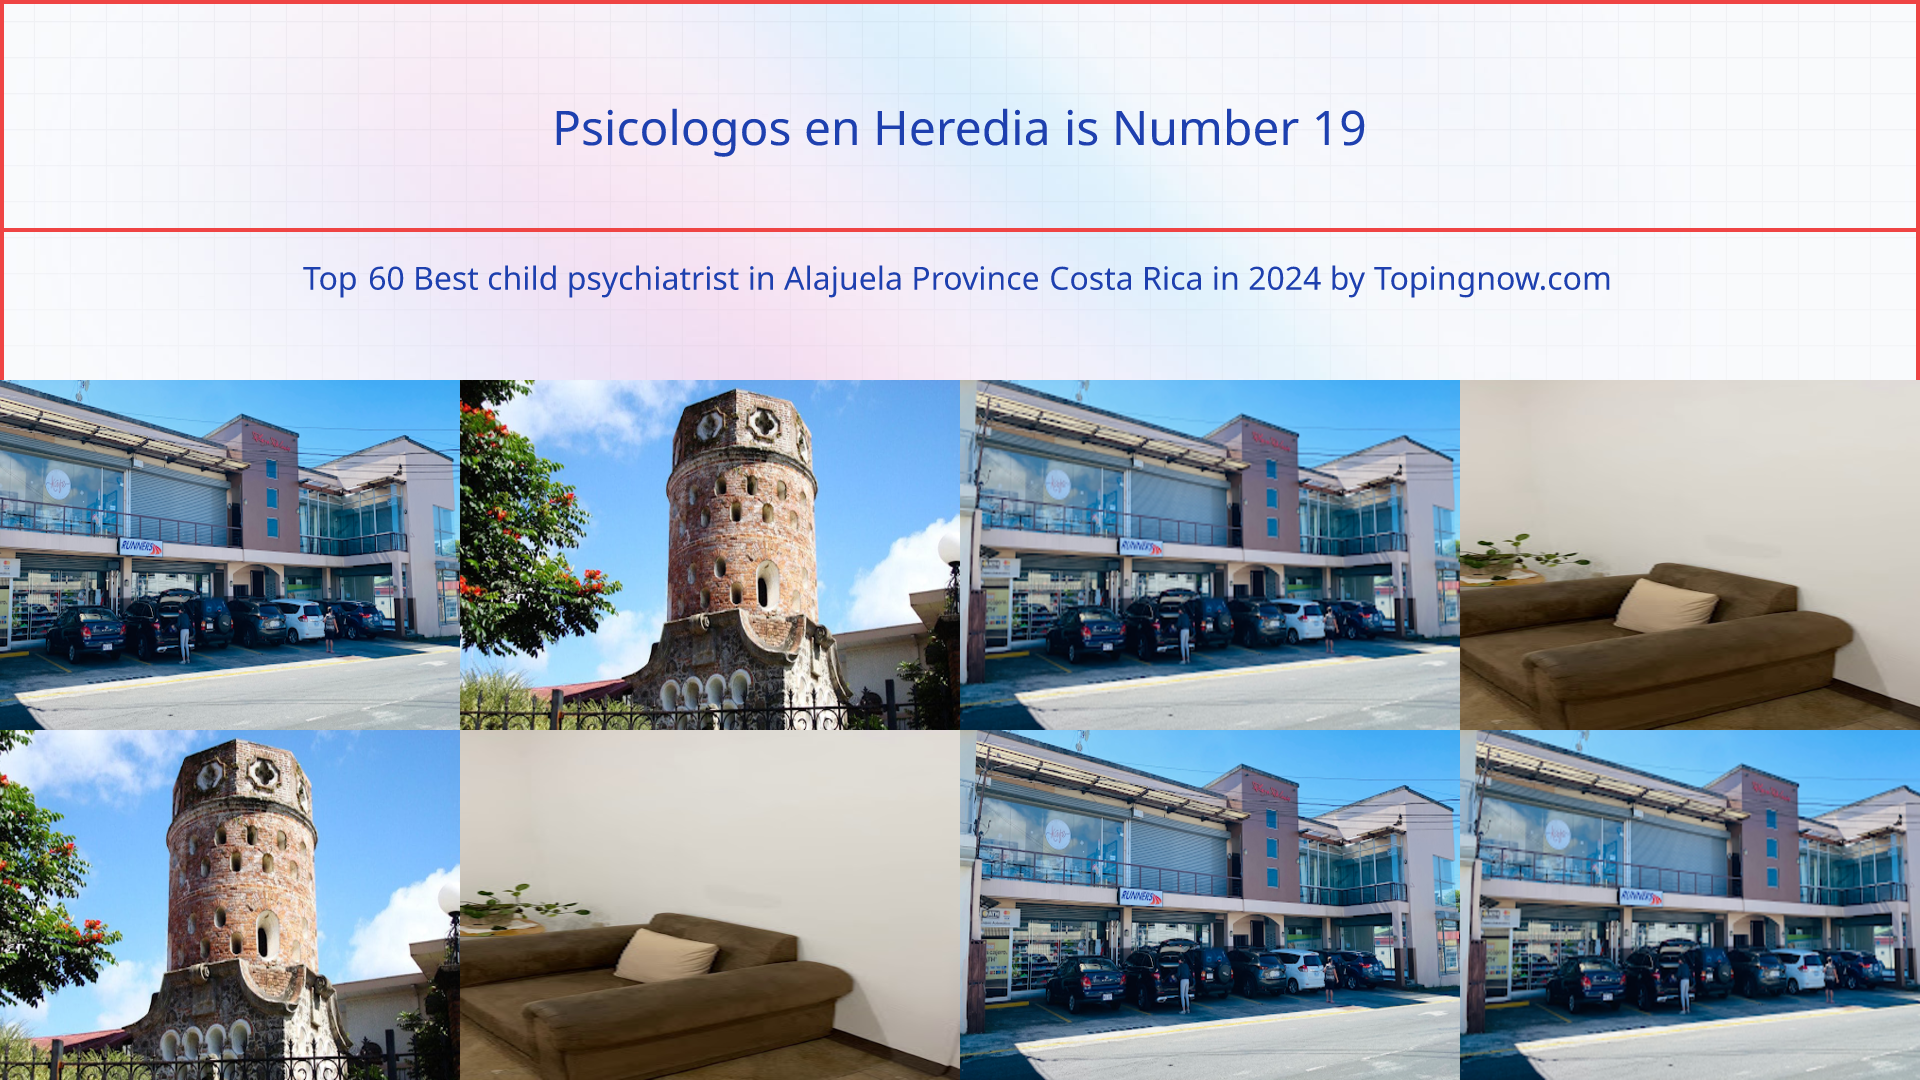 Psicologos en Heredia: Top 60 Best child psychiatrist in Alajuela Province Costa Rica in 2024